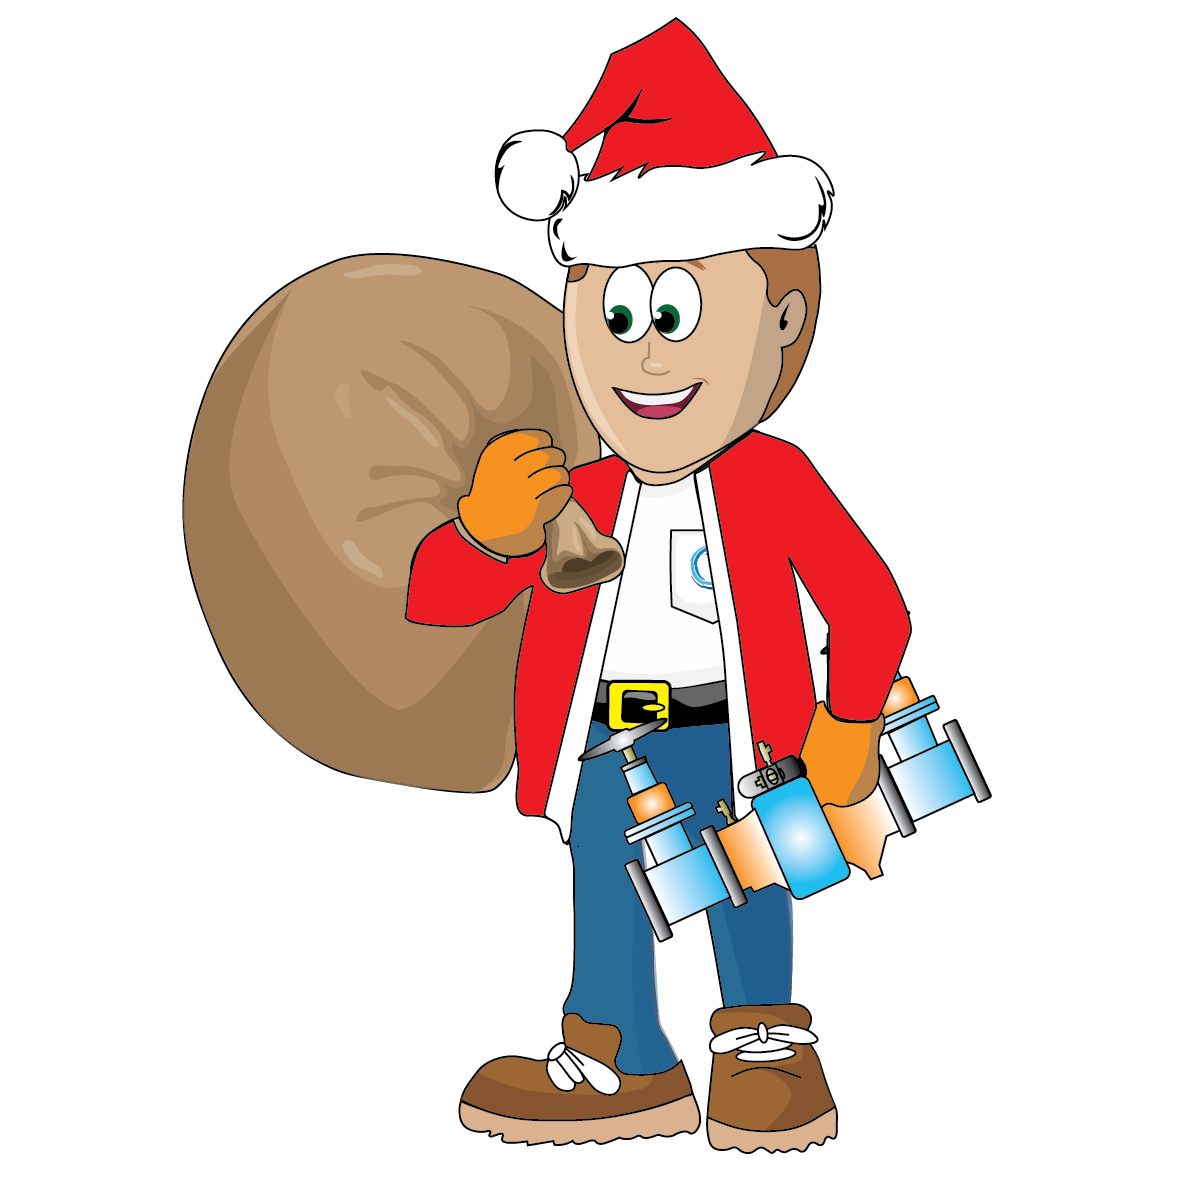 A Holidays themed backflow mascot called backflow bob